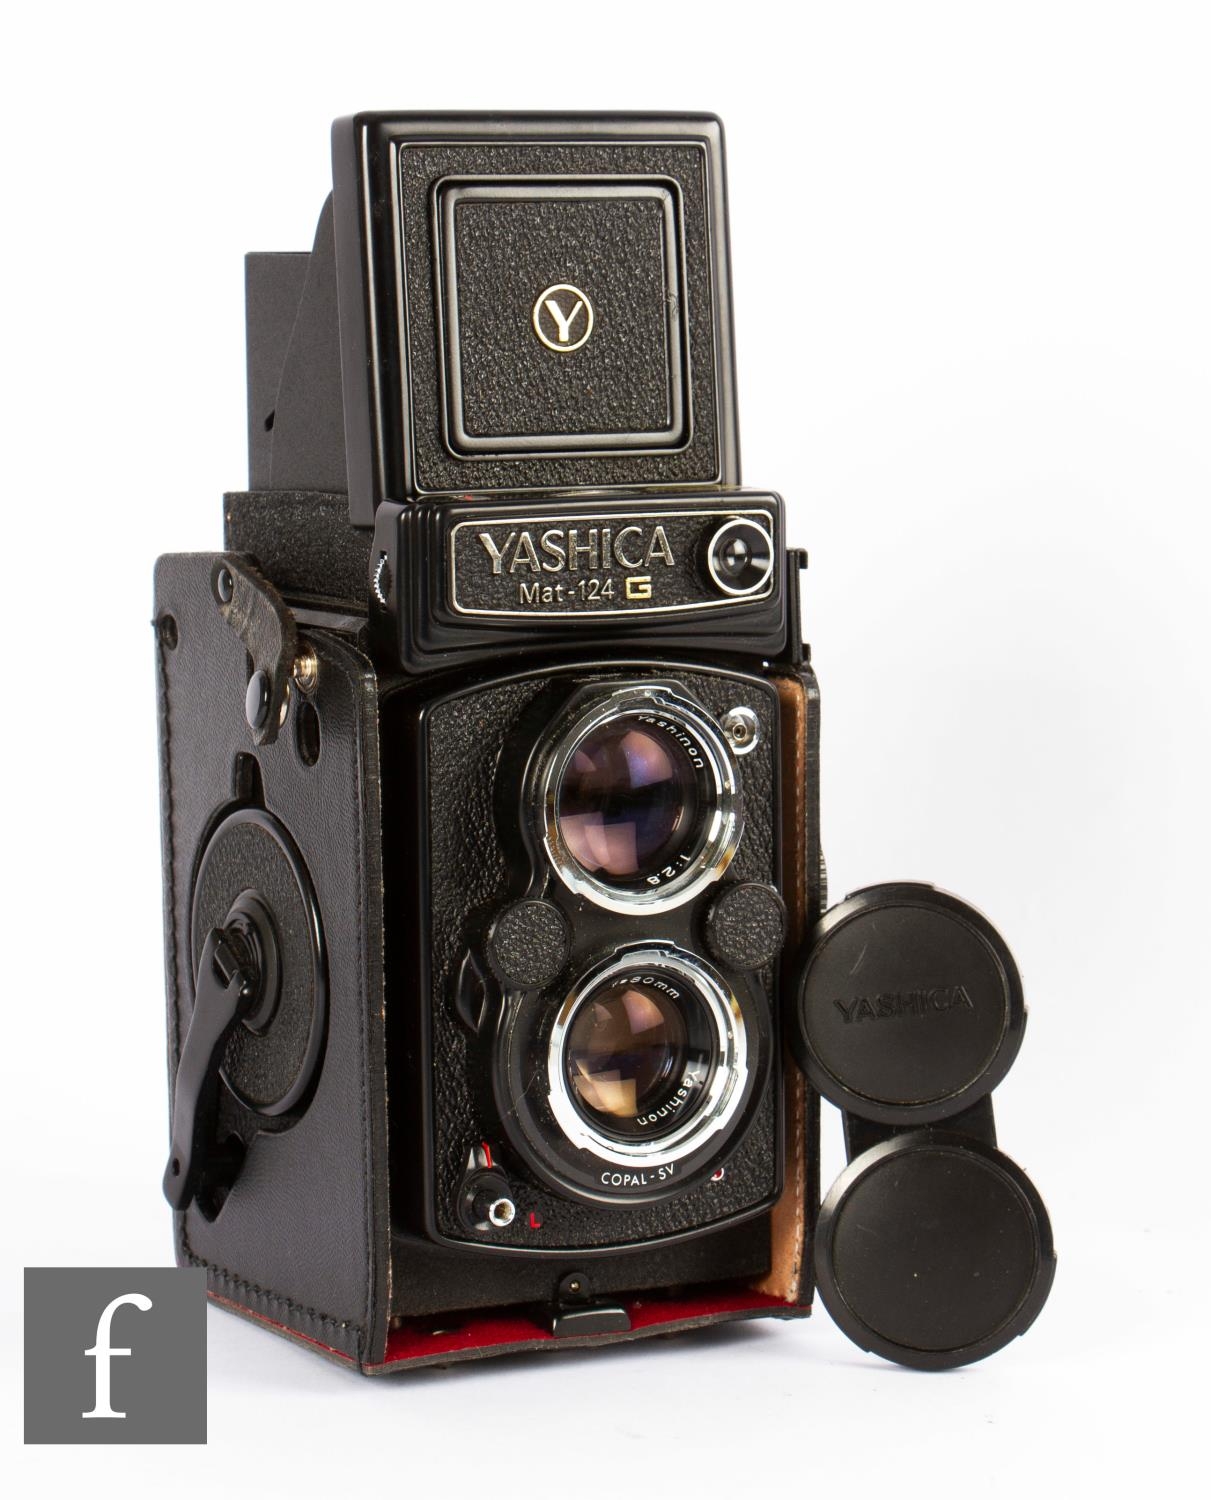 A Yashica Mat-124 G - Medium format twin lens reflex film camera, circa 1970, serial number 138684.